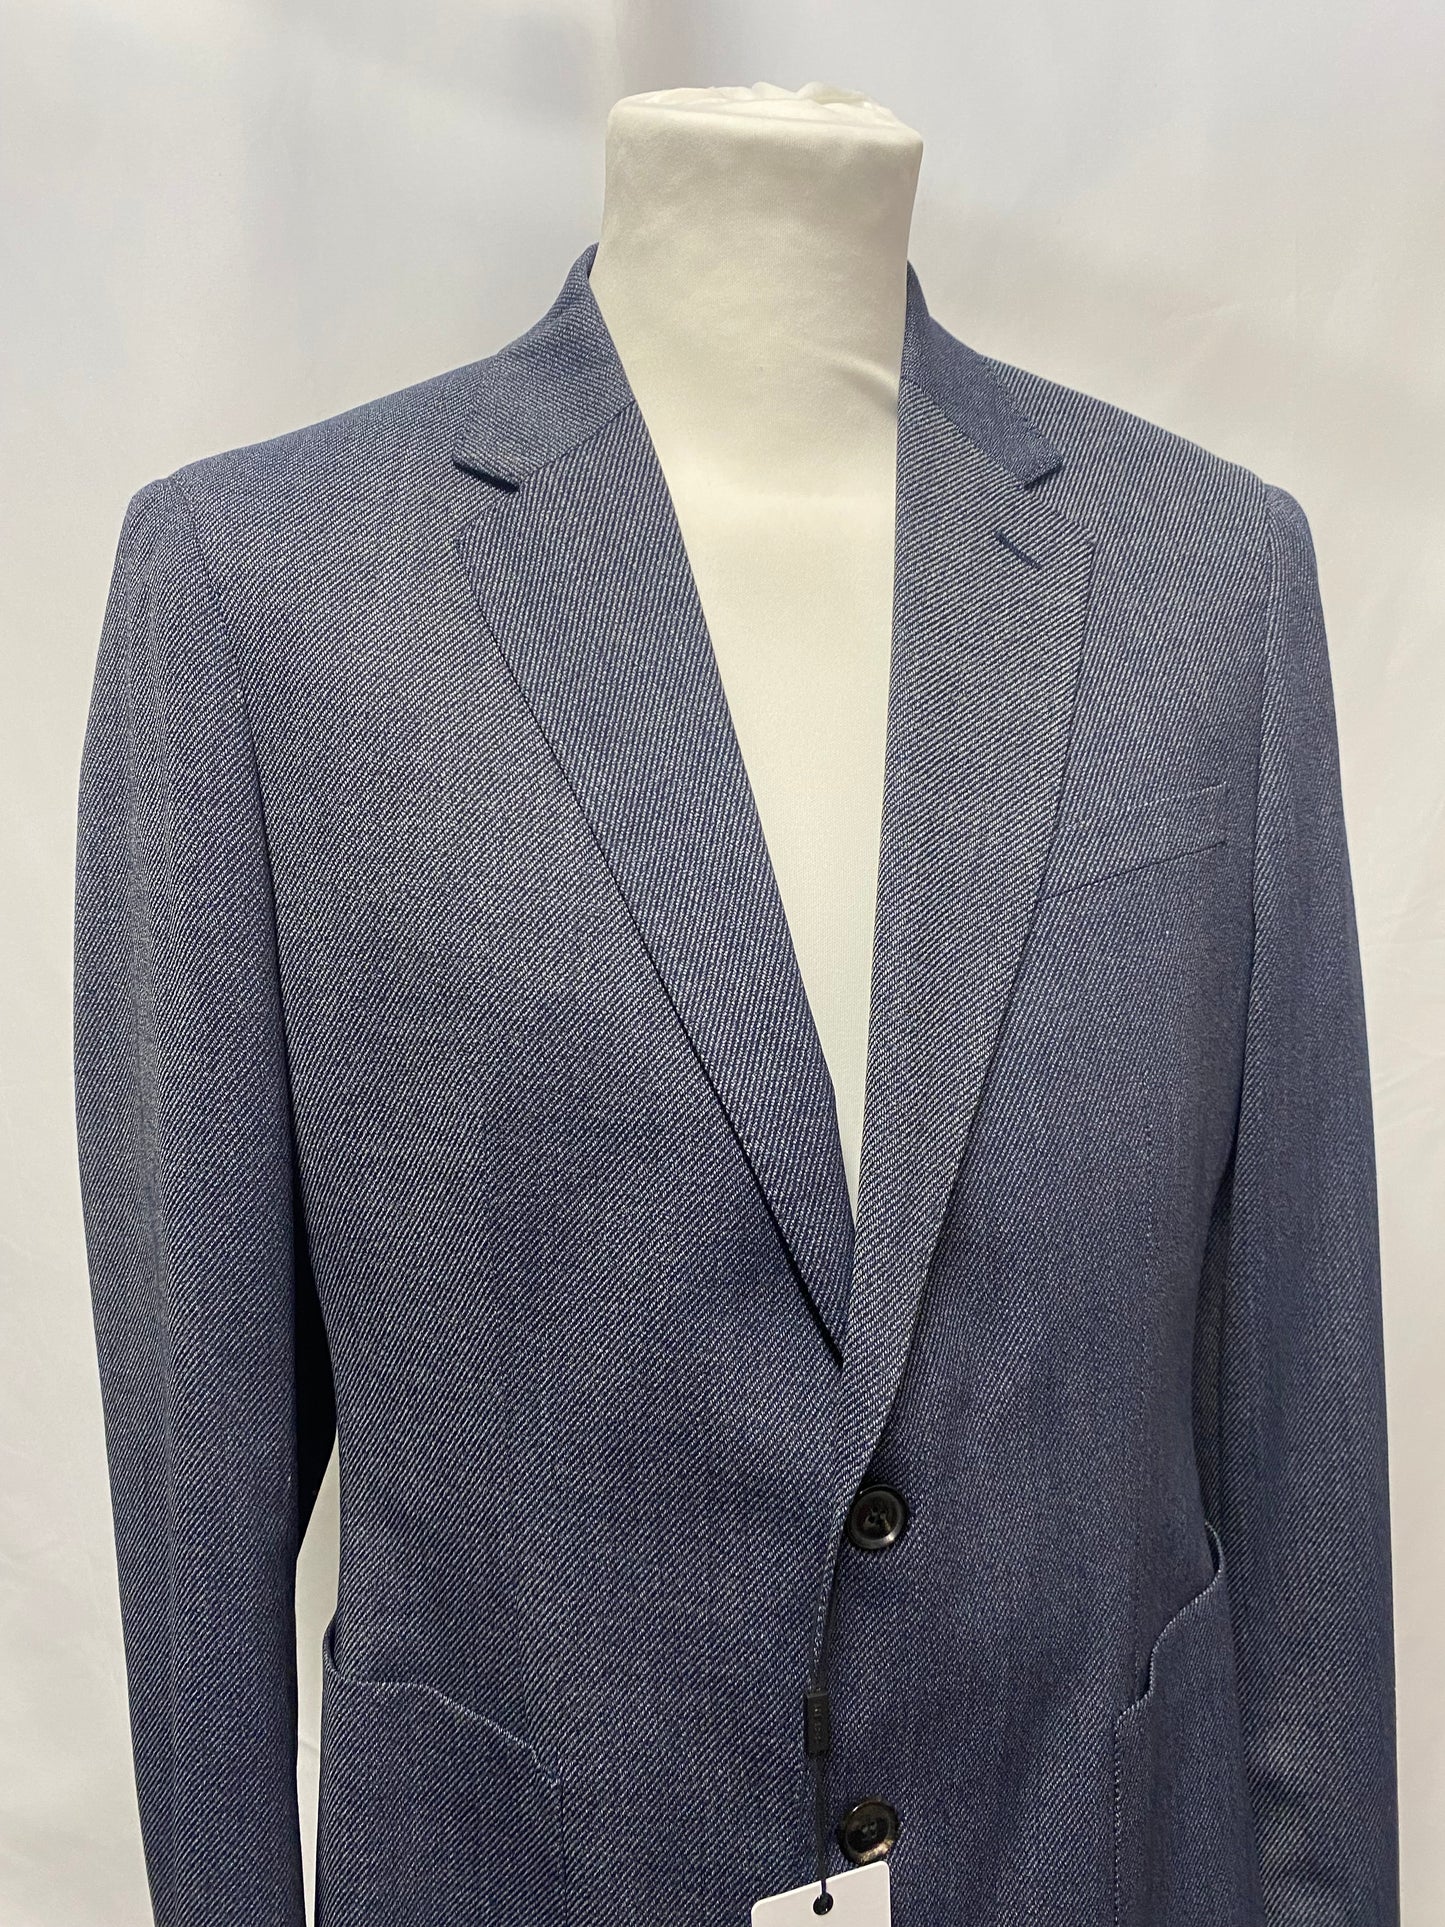 Reiss Blue Wool Blend Blazer with Pockets 40 BNWT